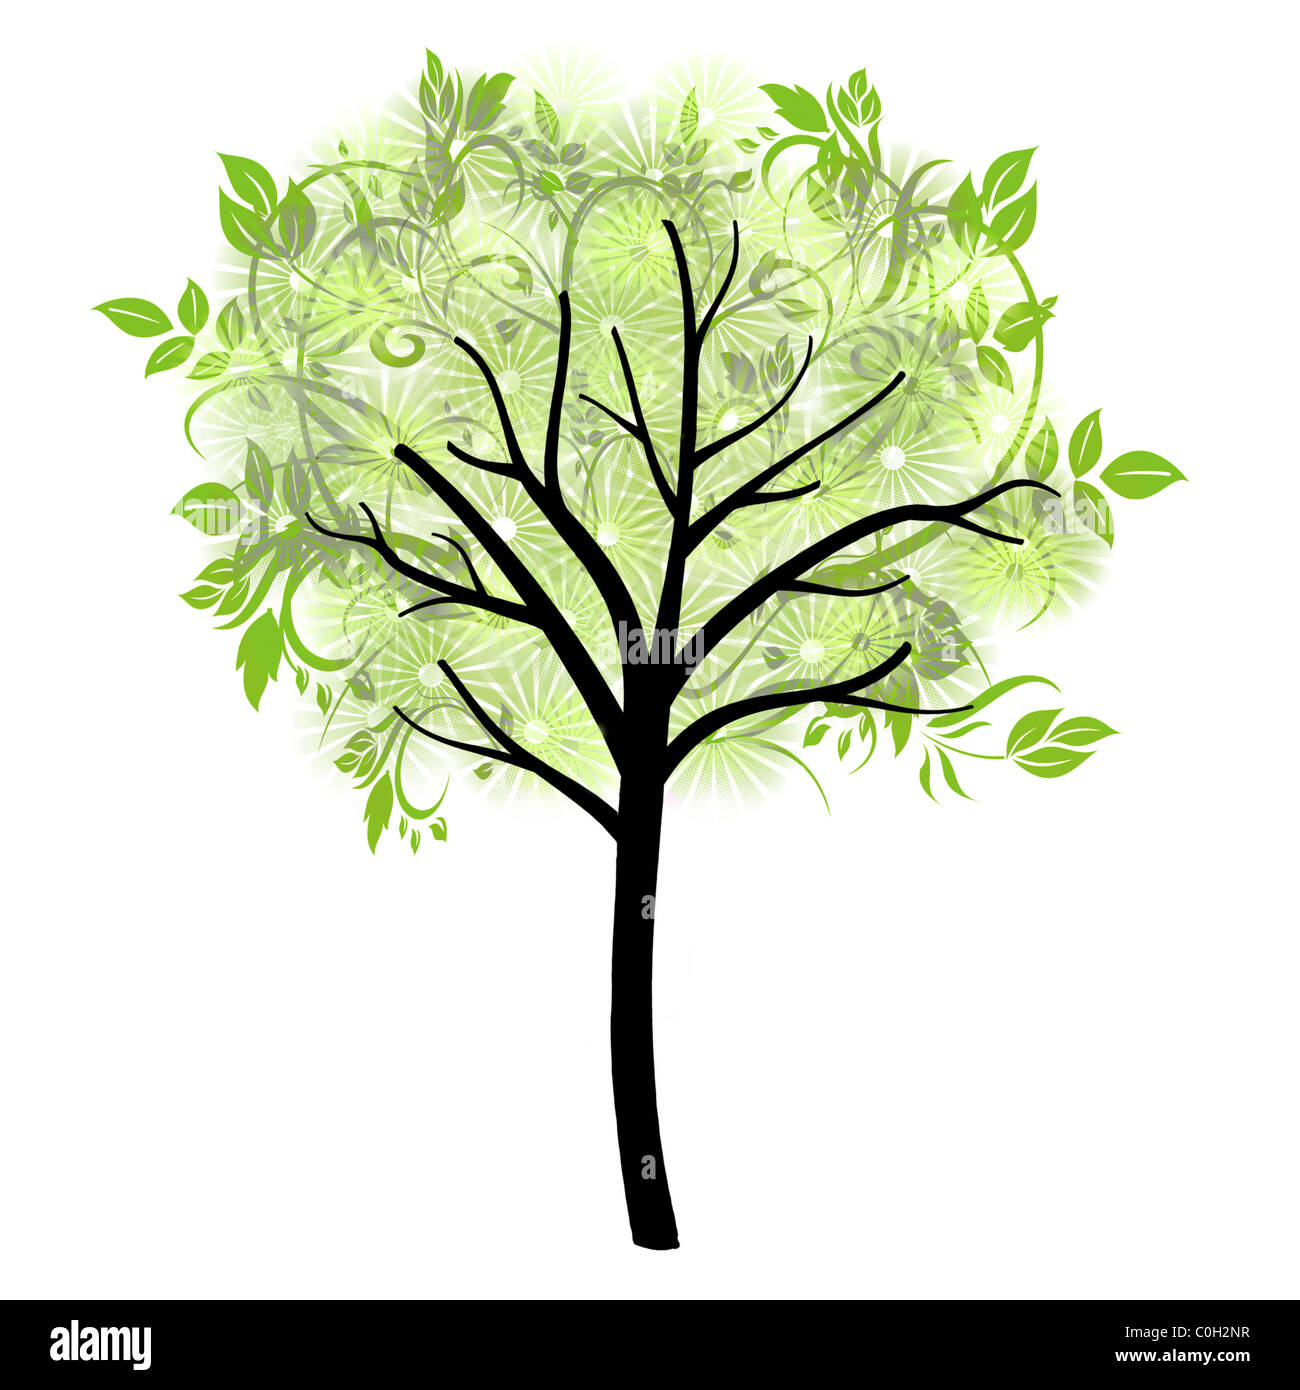 green tree illustration Stock Photo